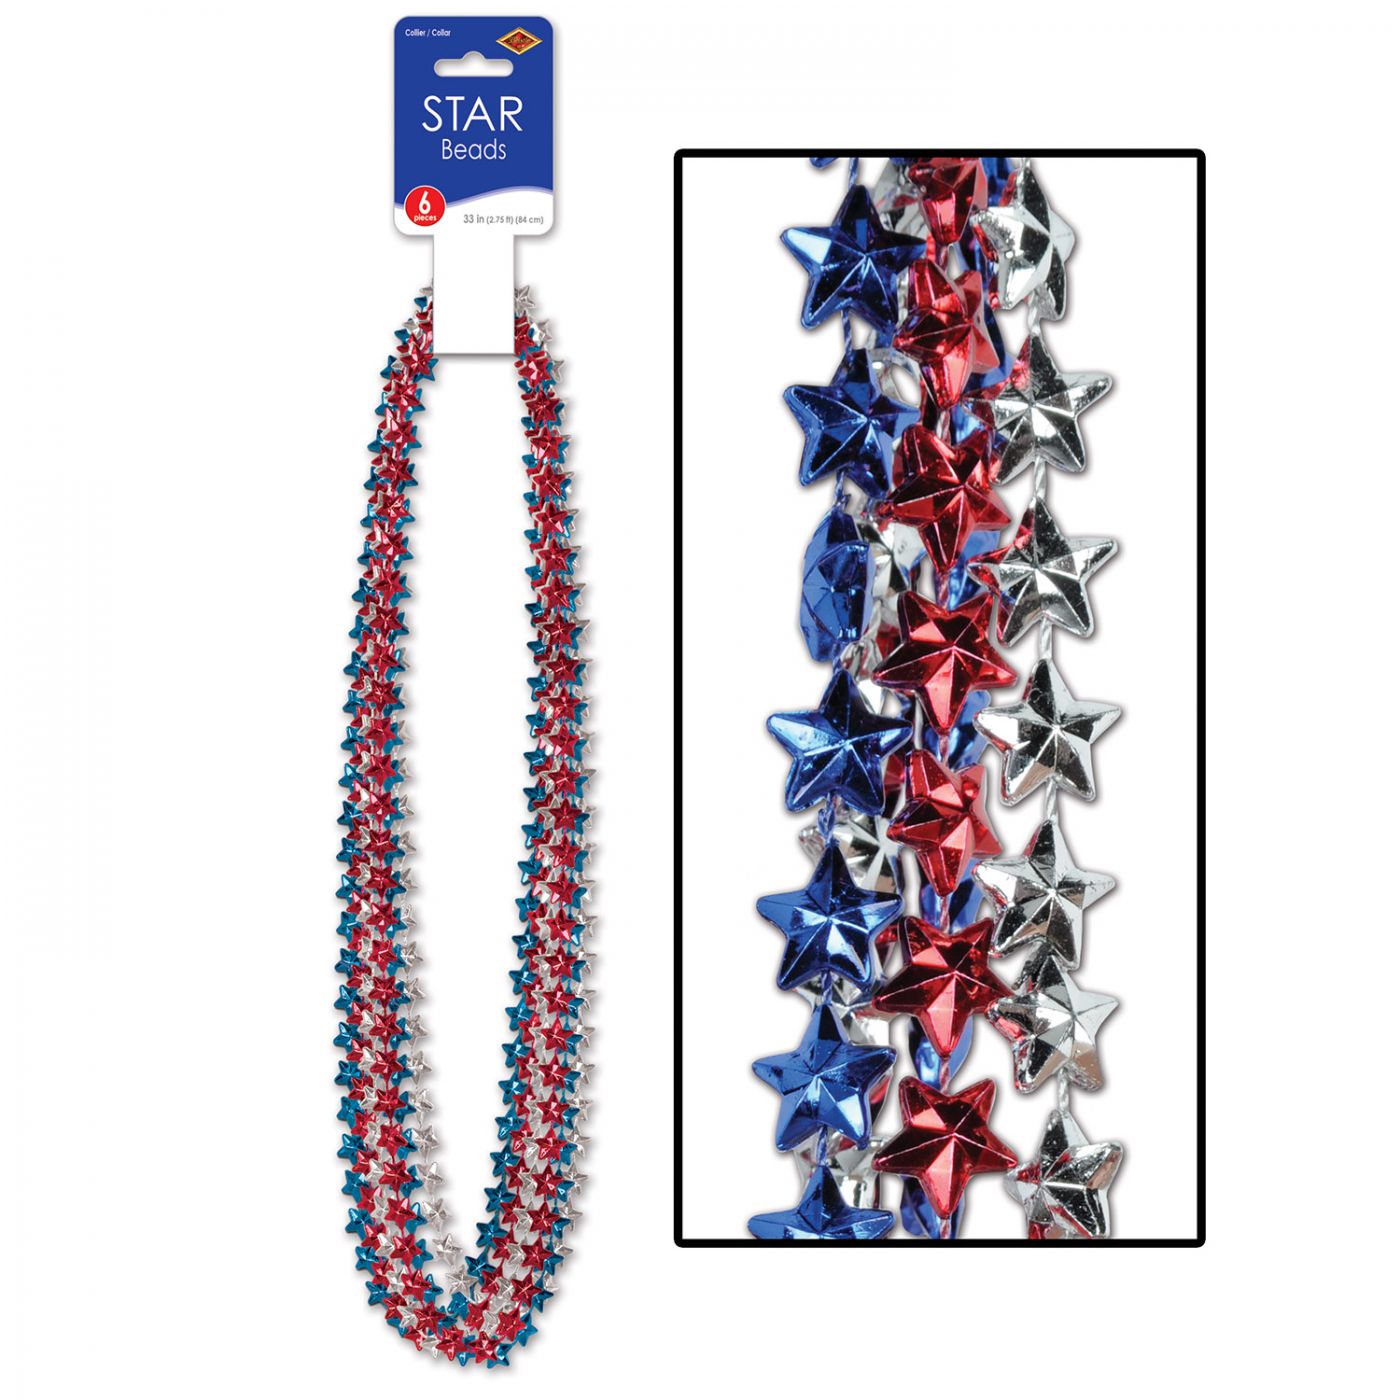 Star Beads (12) image